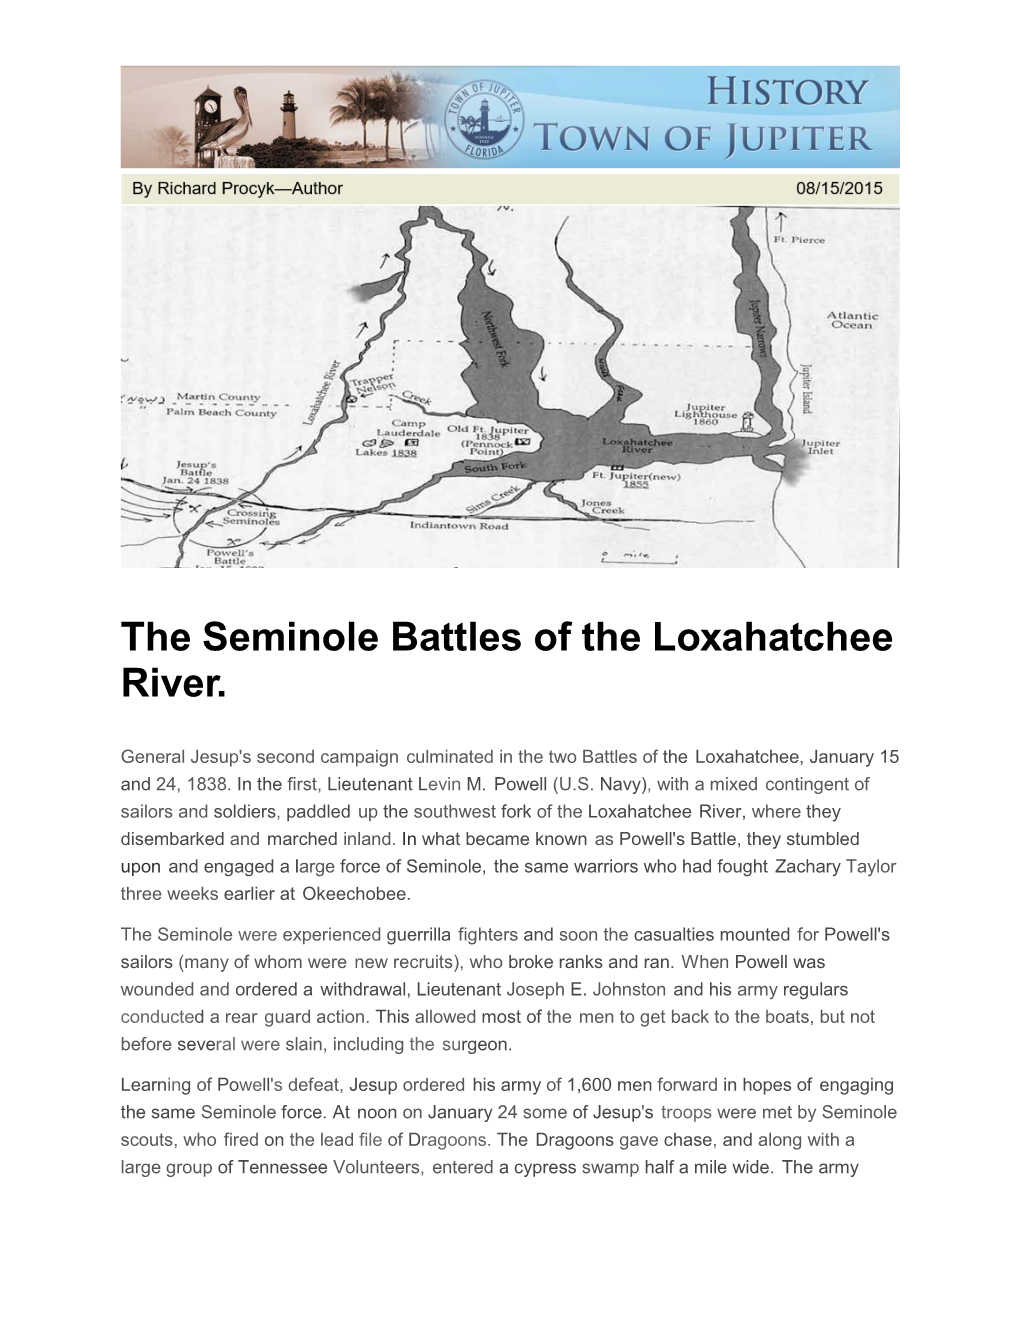 The Seminole Battles of the Loxahatchee River